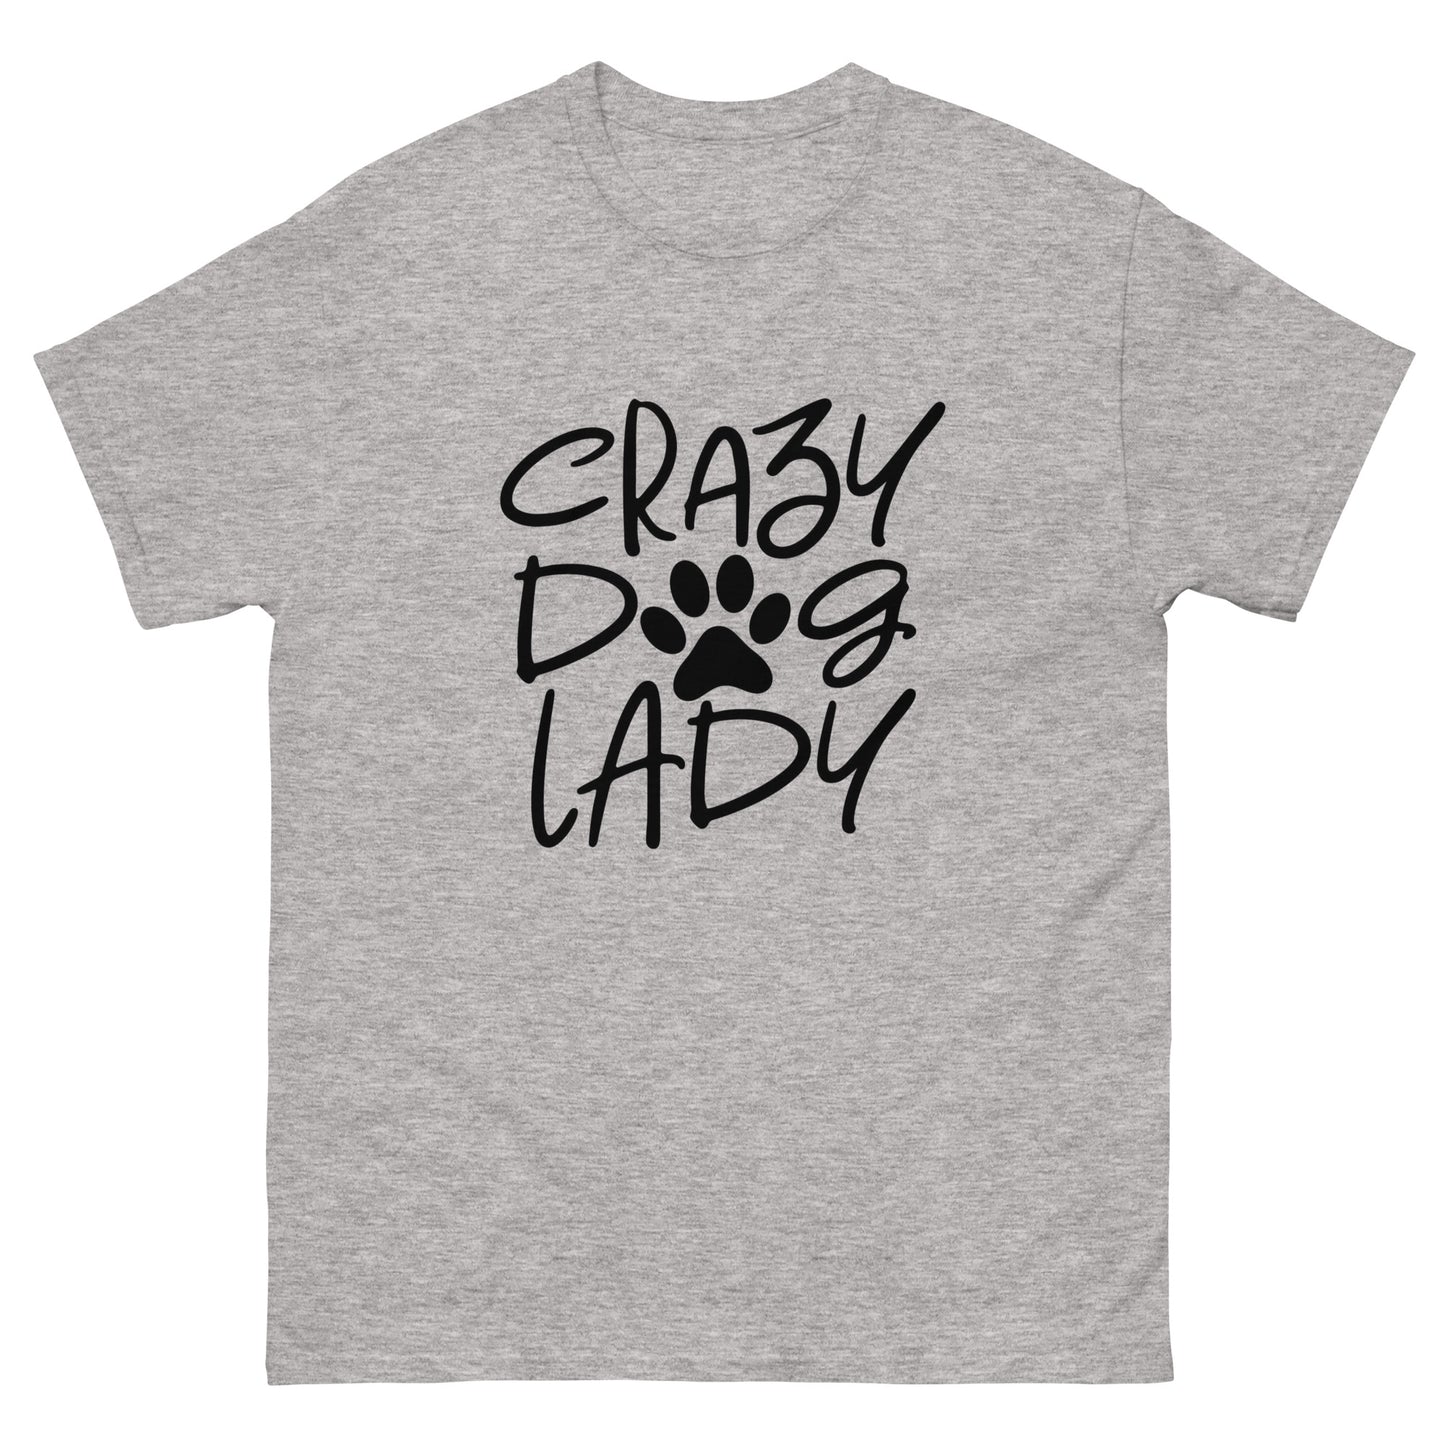 Crazy Dog Lady - classic tee